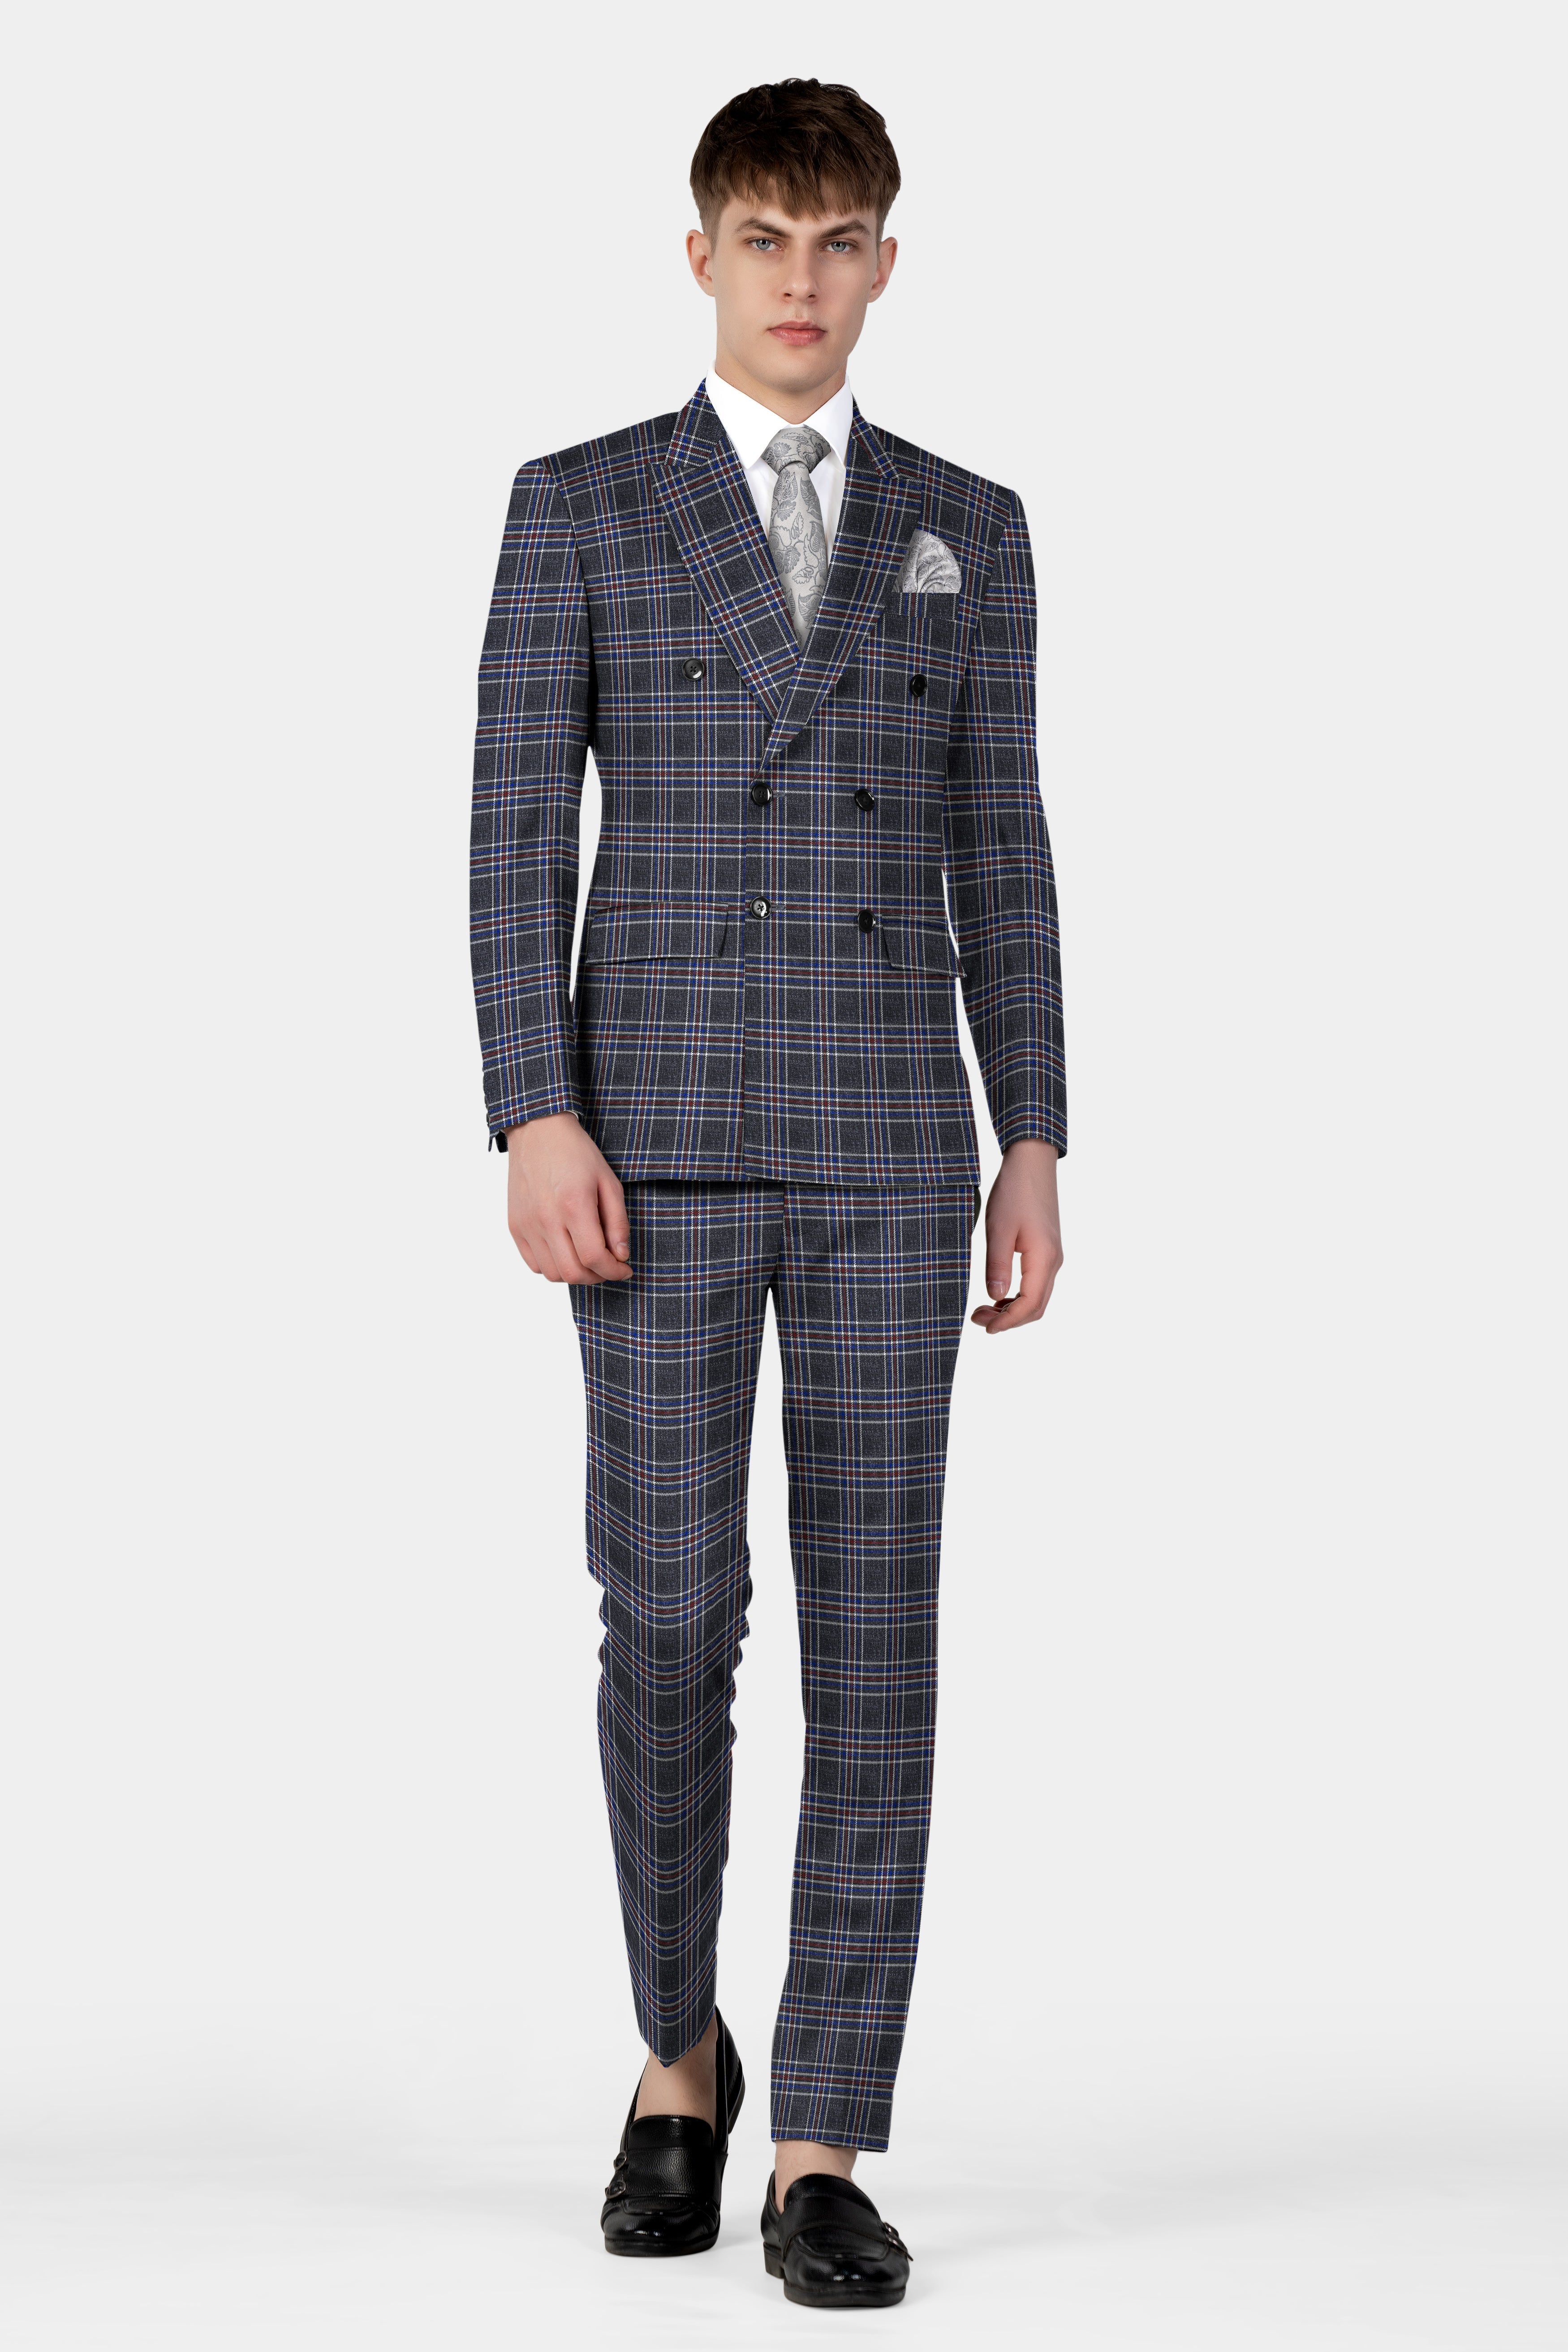 Tuatara Gray Multicolour Plaid Double Breasted Tweed Suit